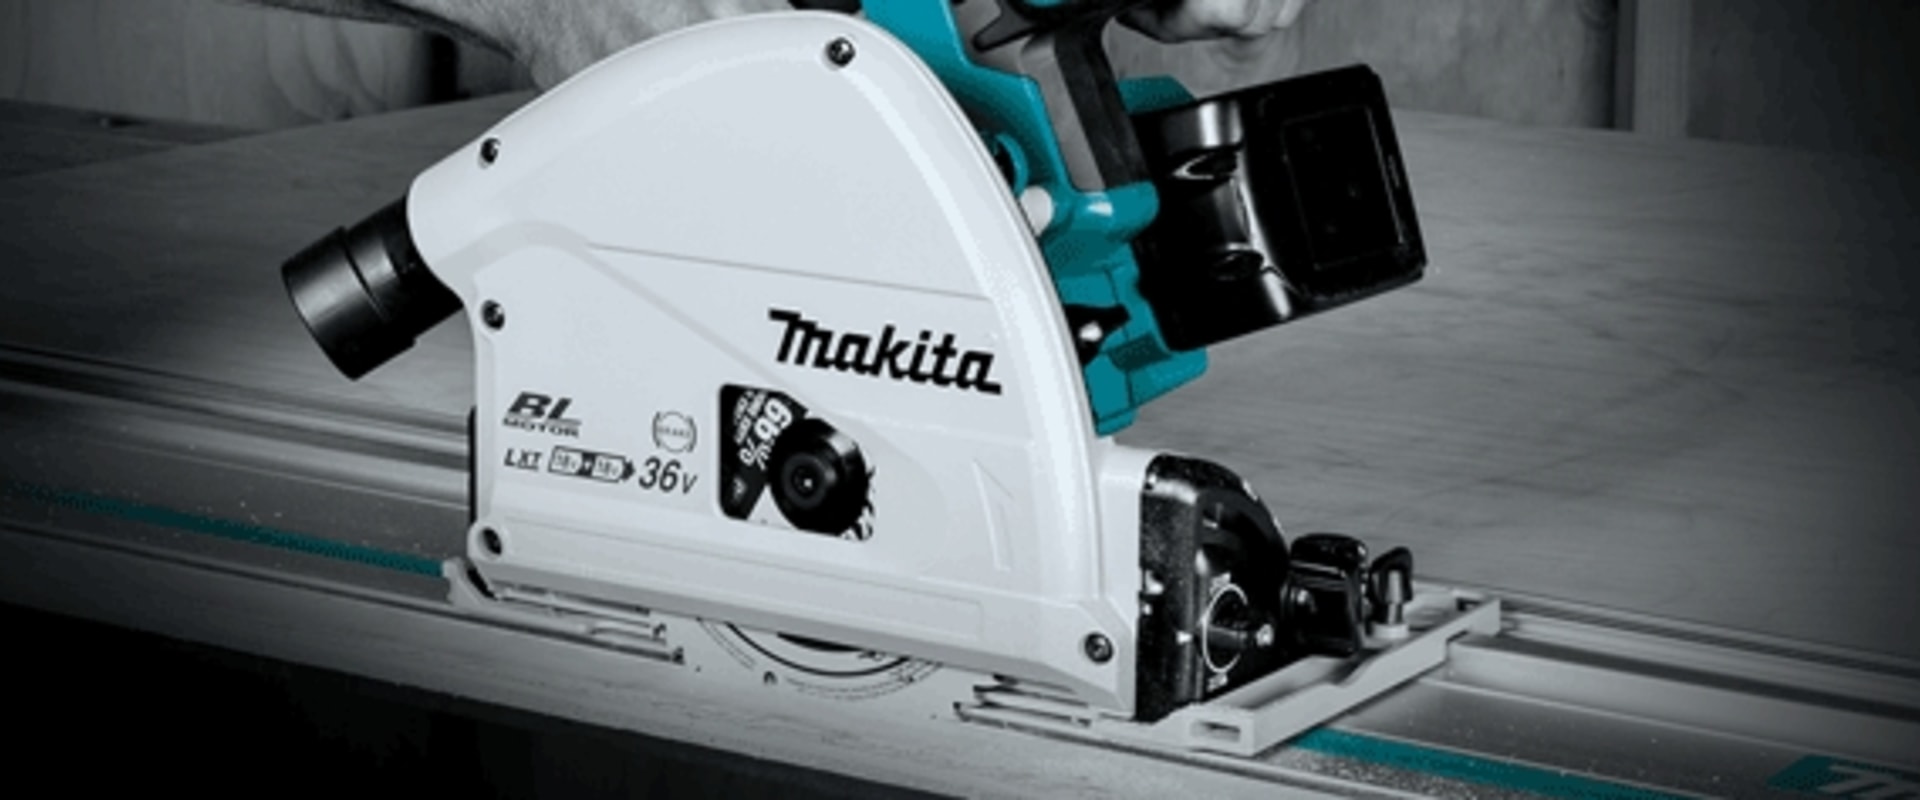 Are makita power tools made in china?